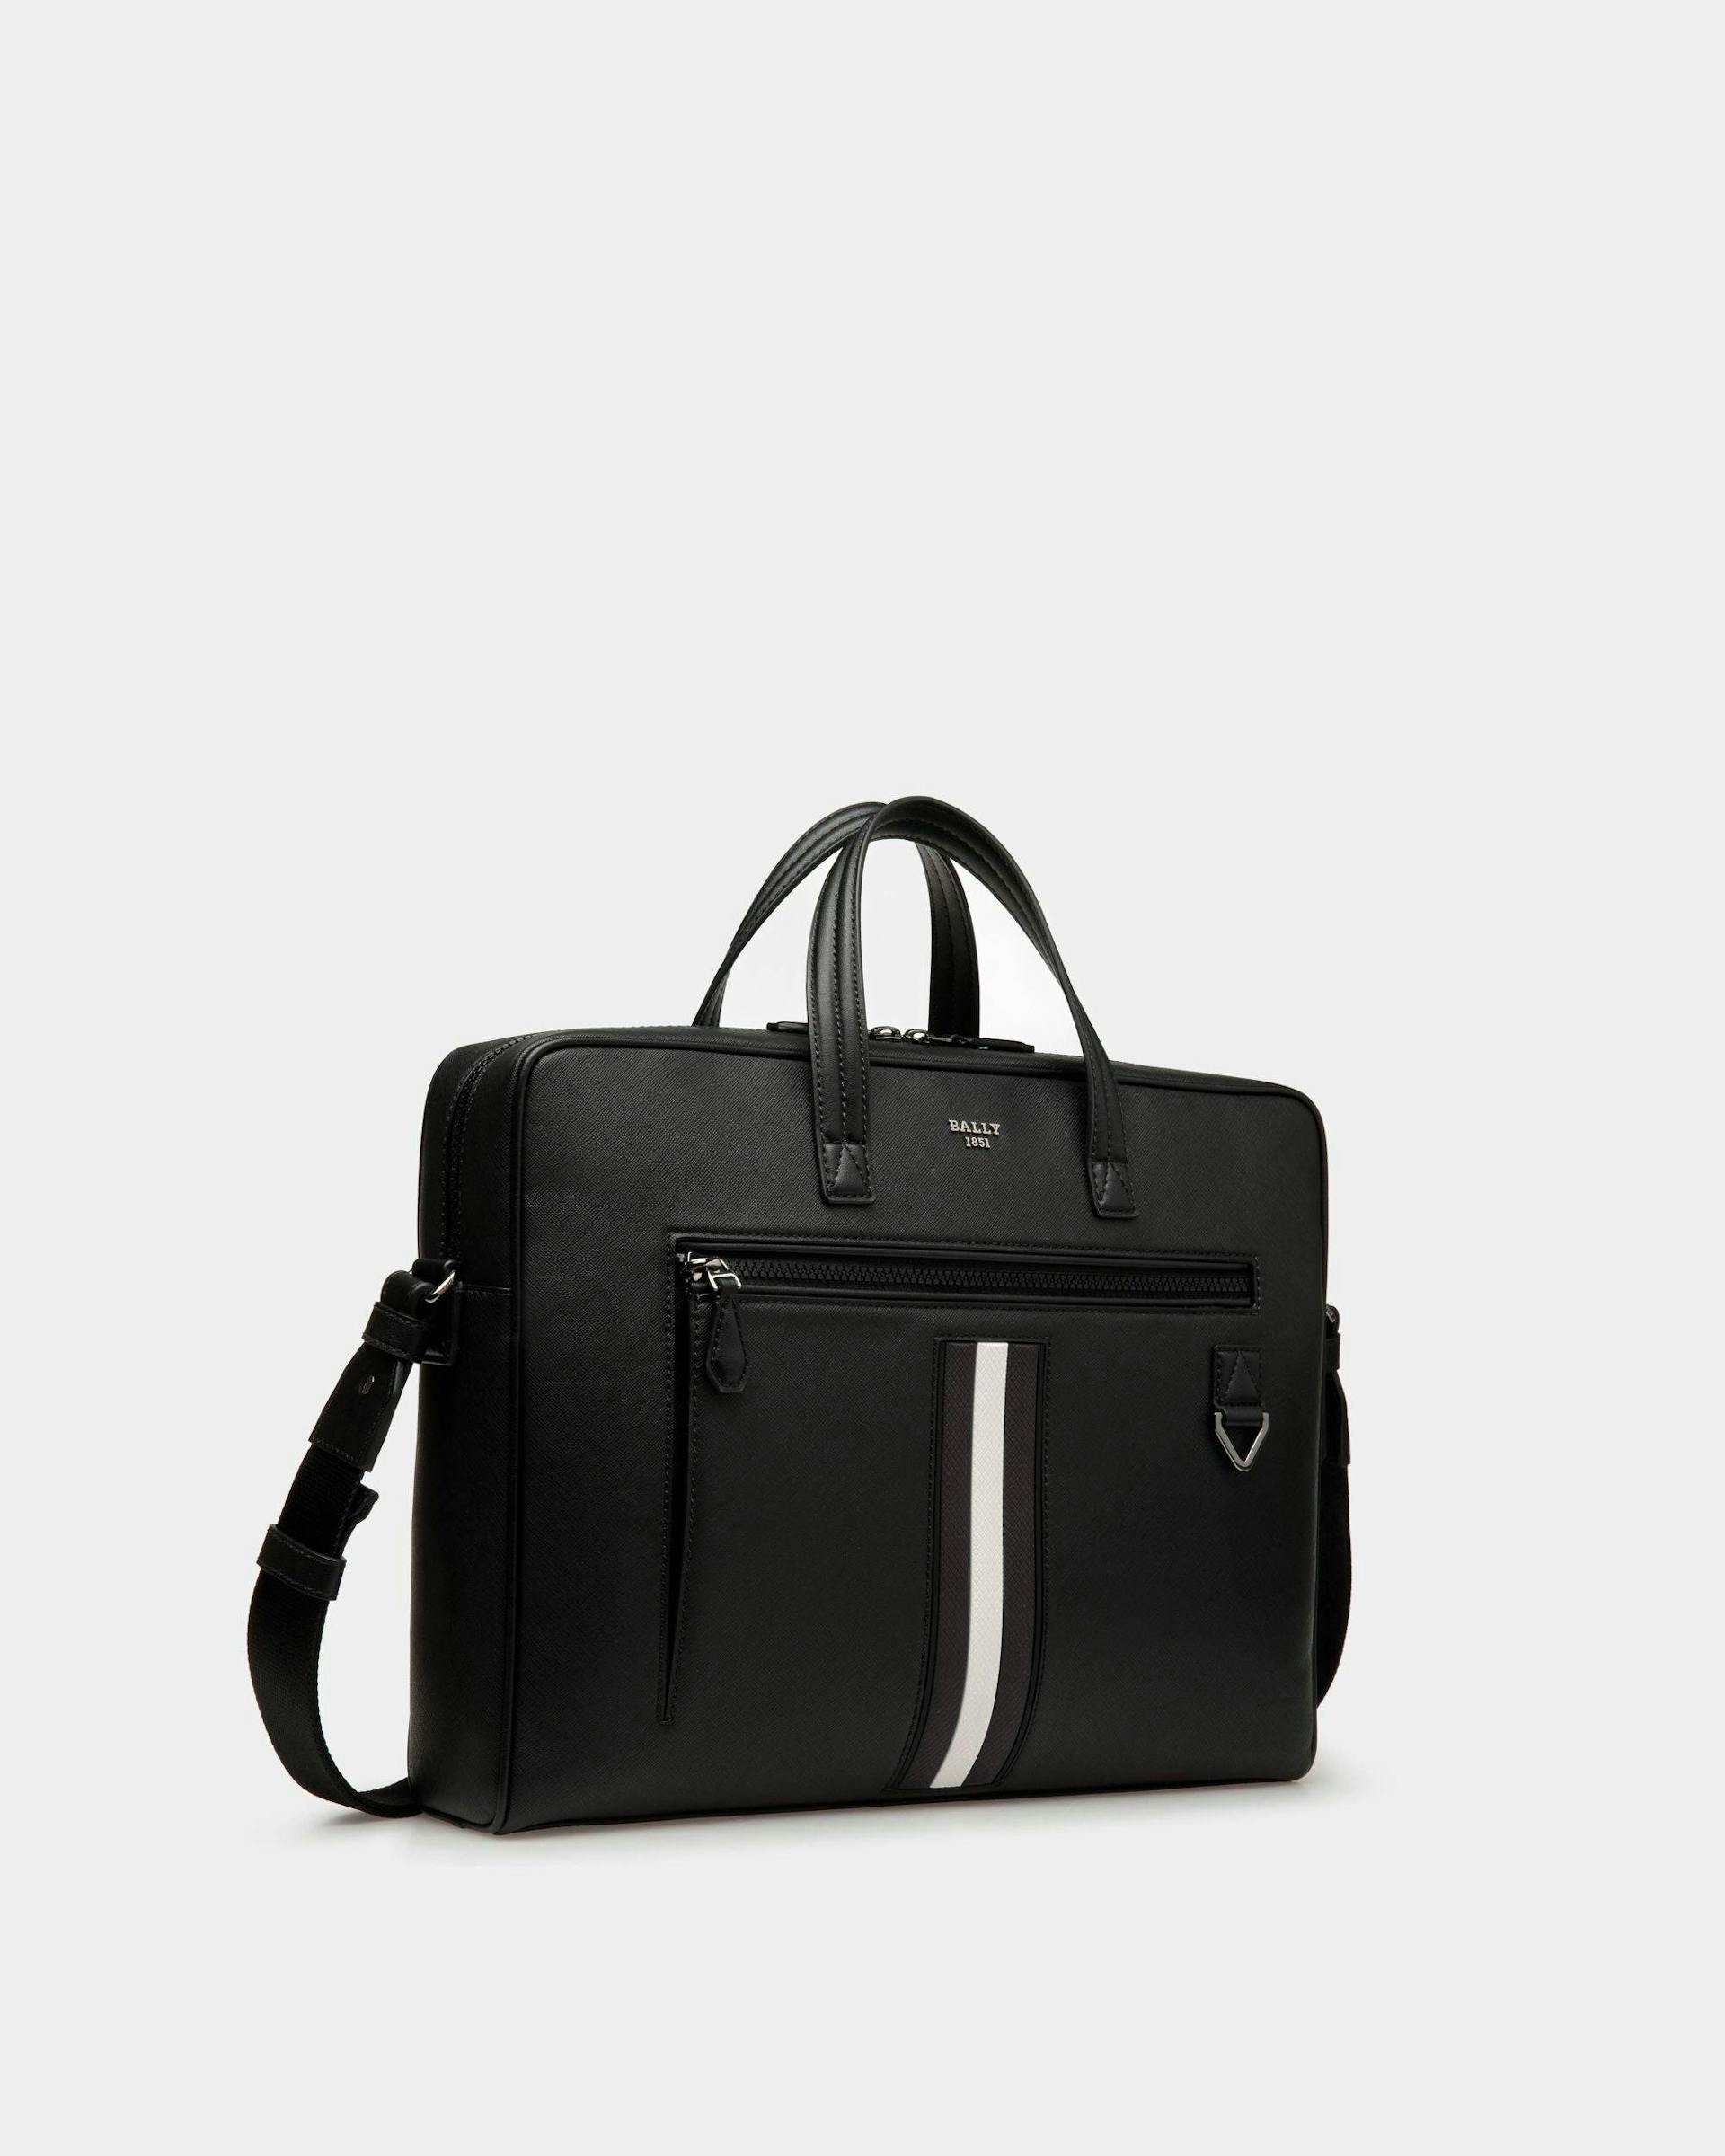 Men's Mythos Business Bag In Black Leather | Bally | Still Life 3/4 Front